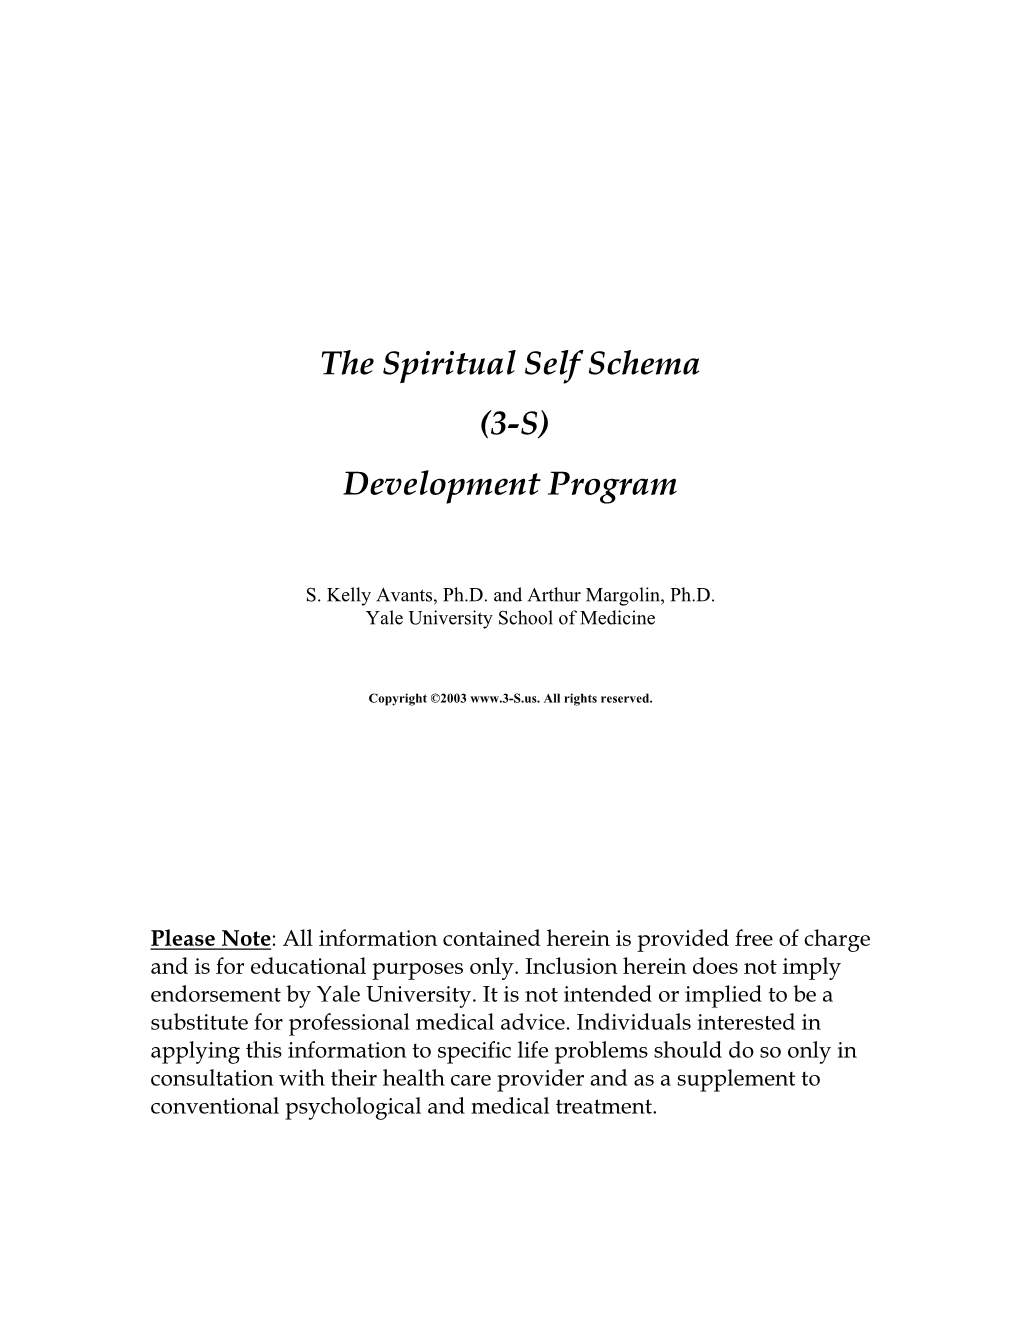 The Spiritual Self Schema (3-S) Development Program